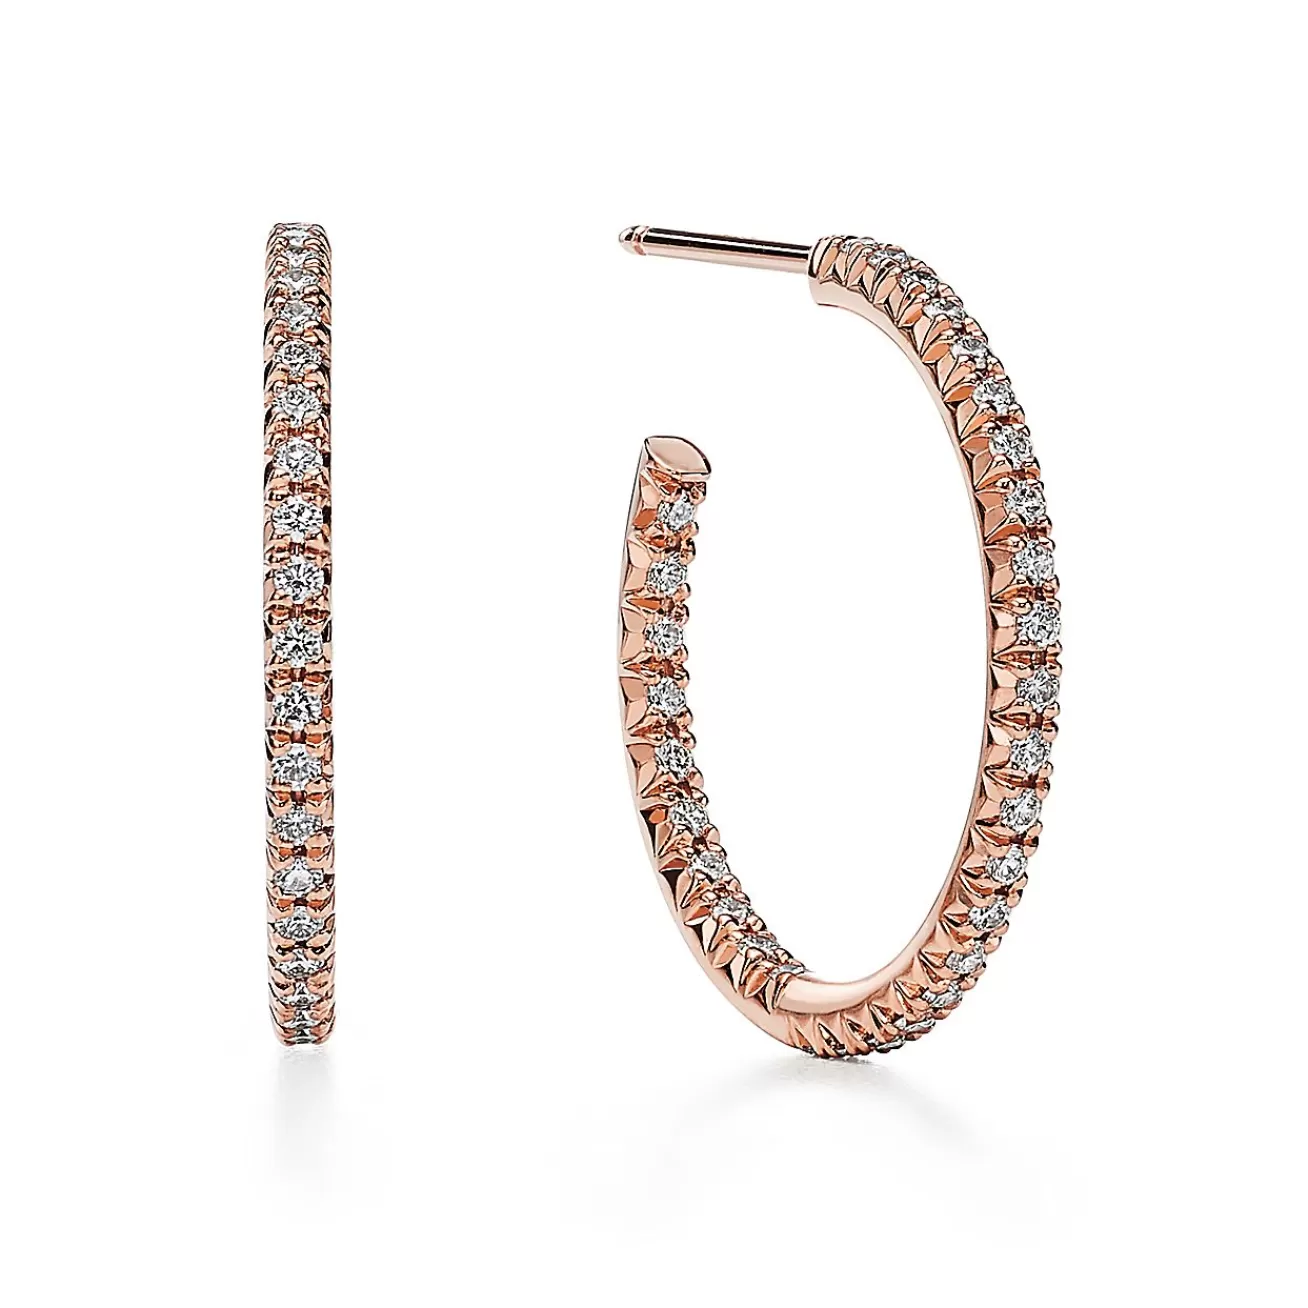 Tiffany & Co. Tiffany Metro Hoop Earrings in Rose Gold with Diamonds, Medium | ^ Earrings | Hoop Earrings